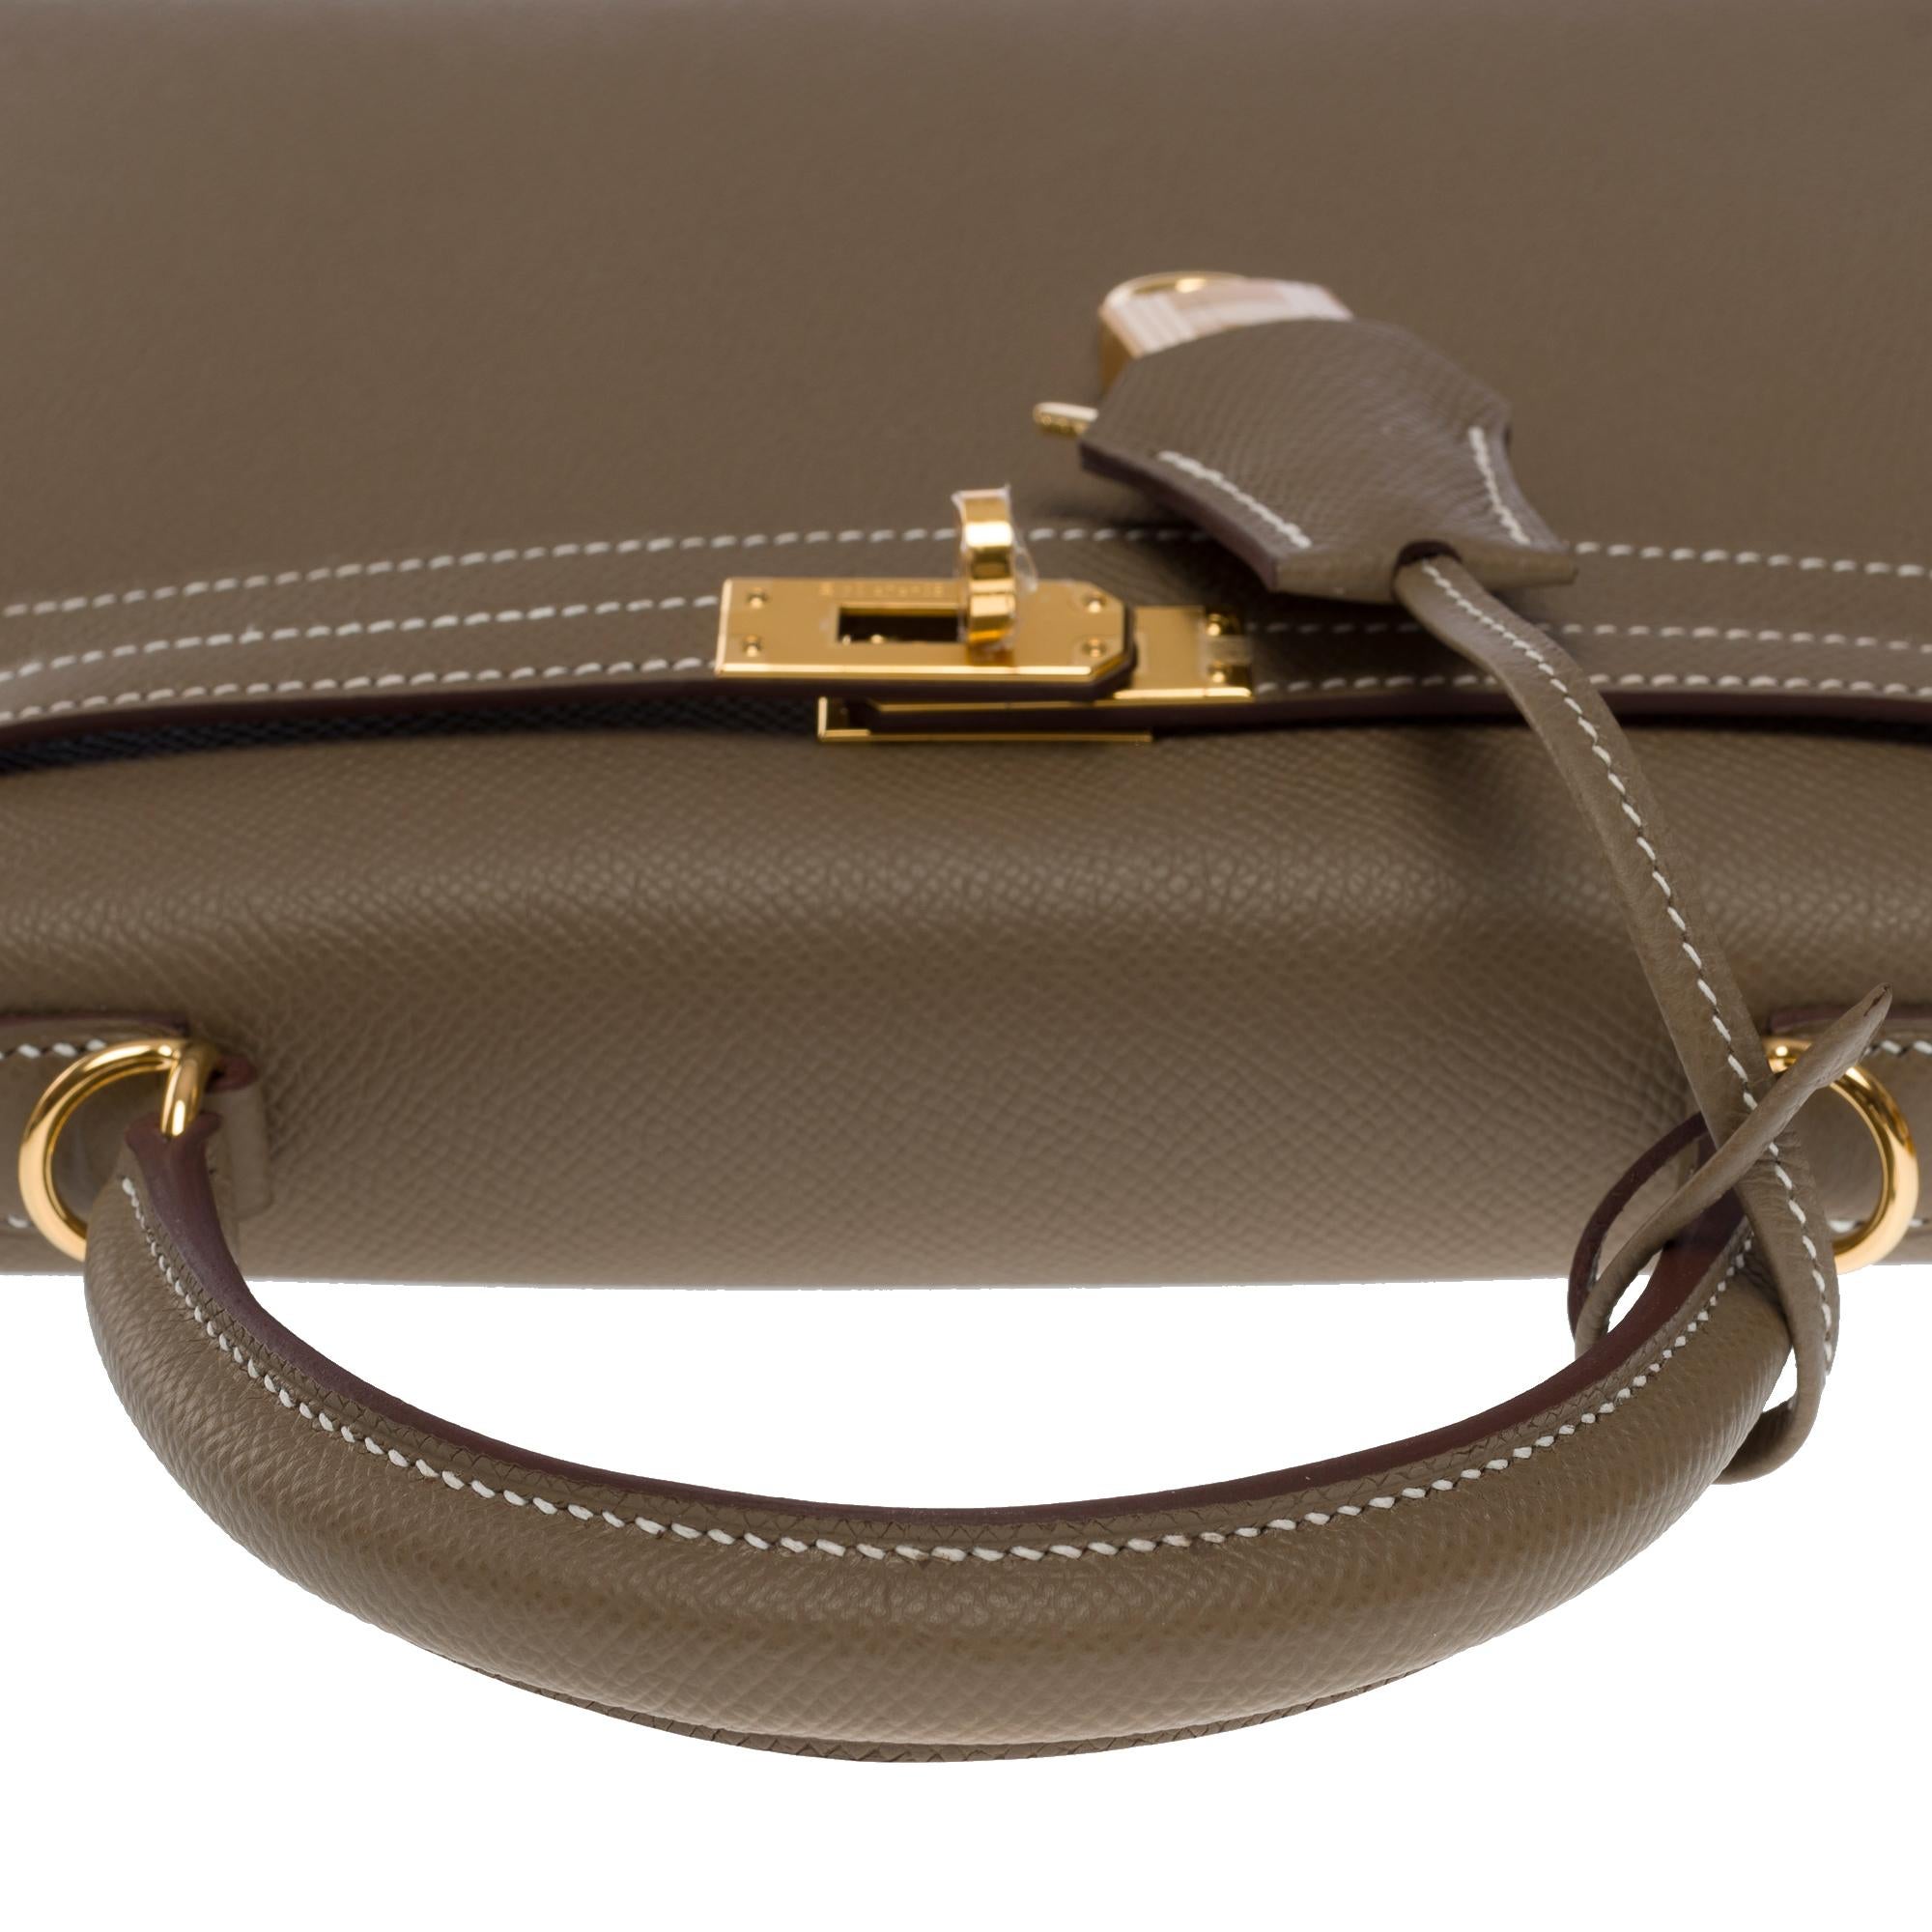 New Amazing Hermès Kelly 25 handbag strap in Etoupe epsom leather, GHW 4